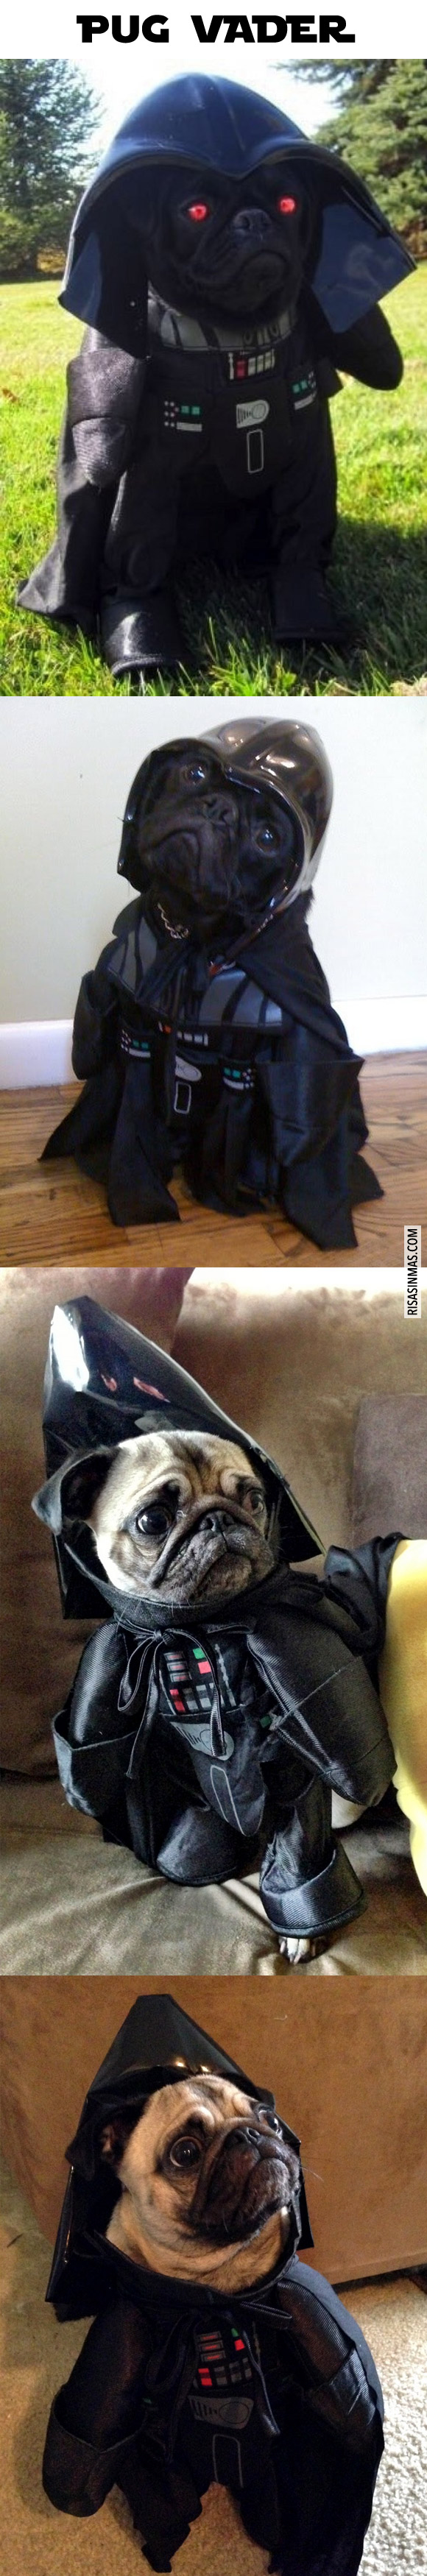 Pug Vader